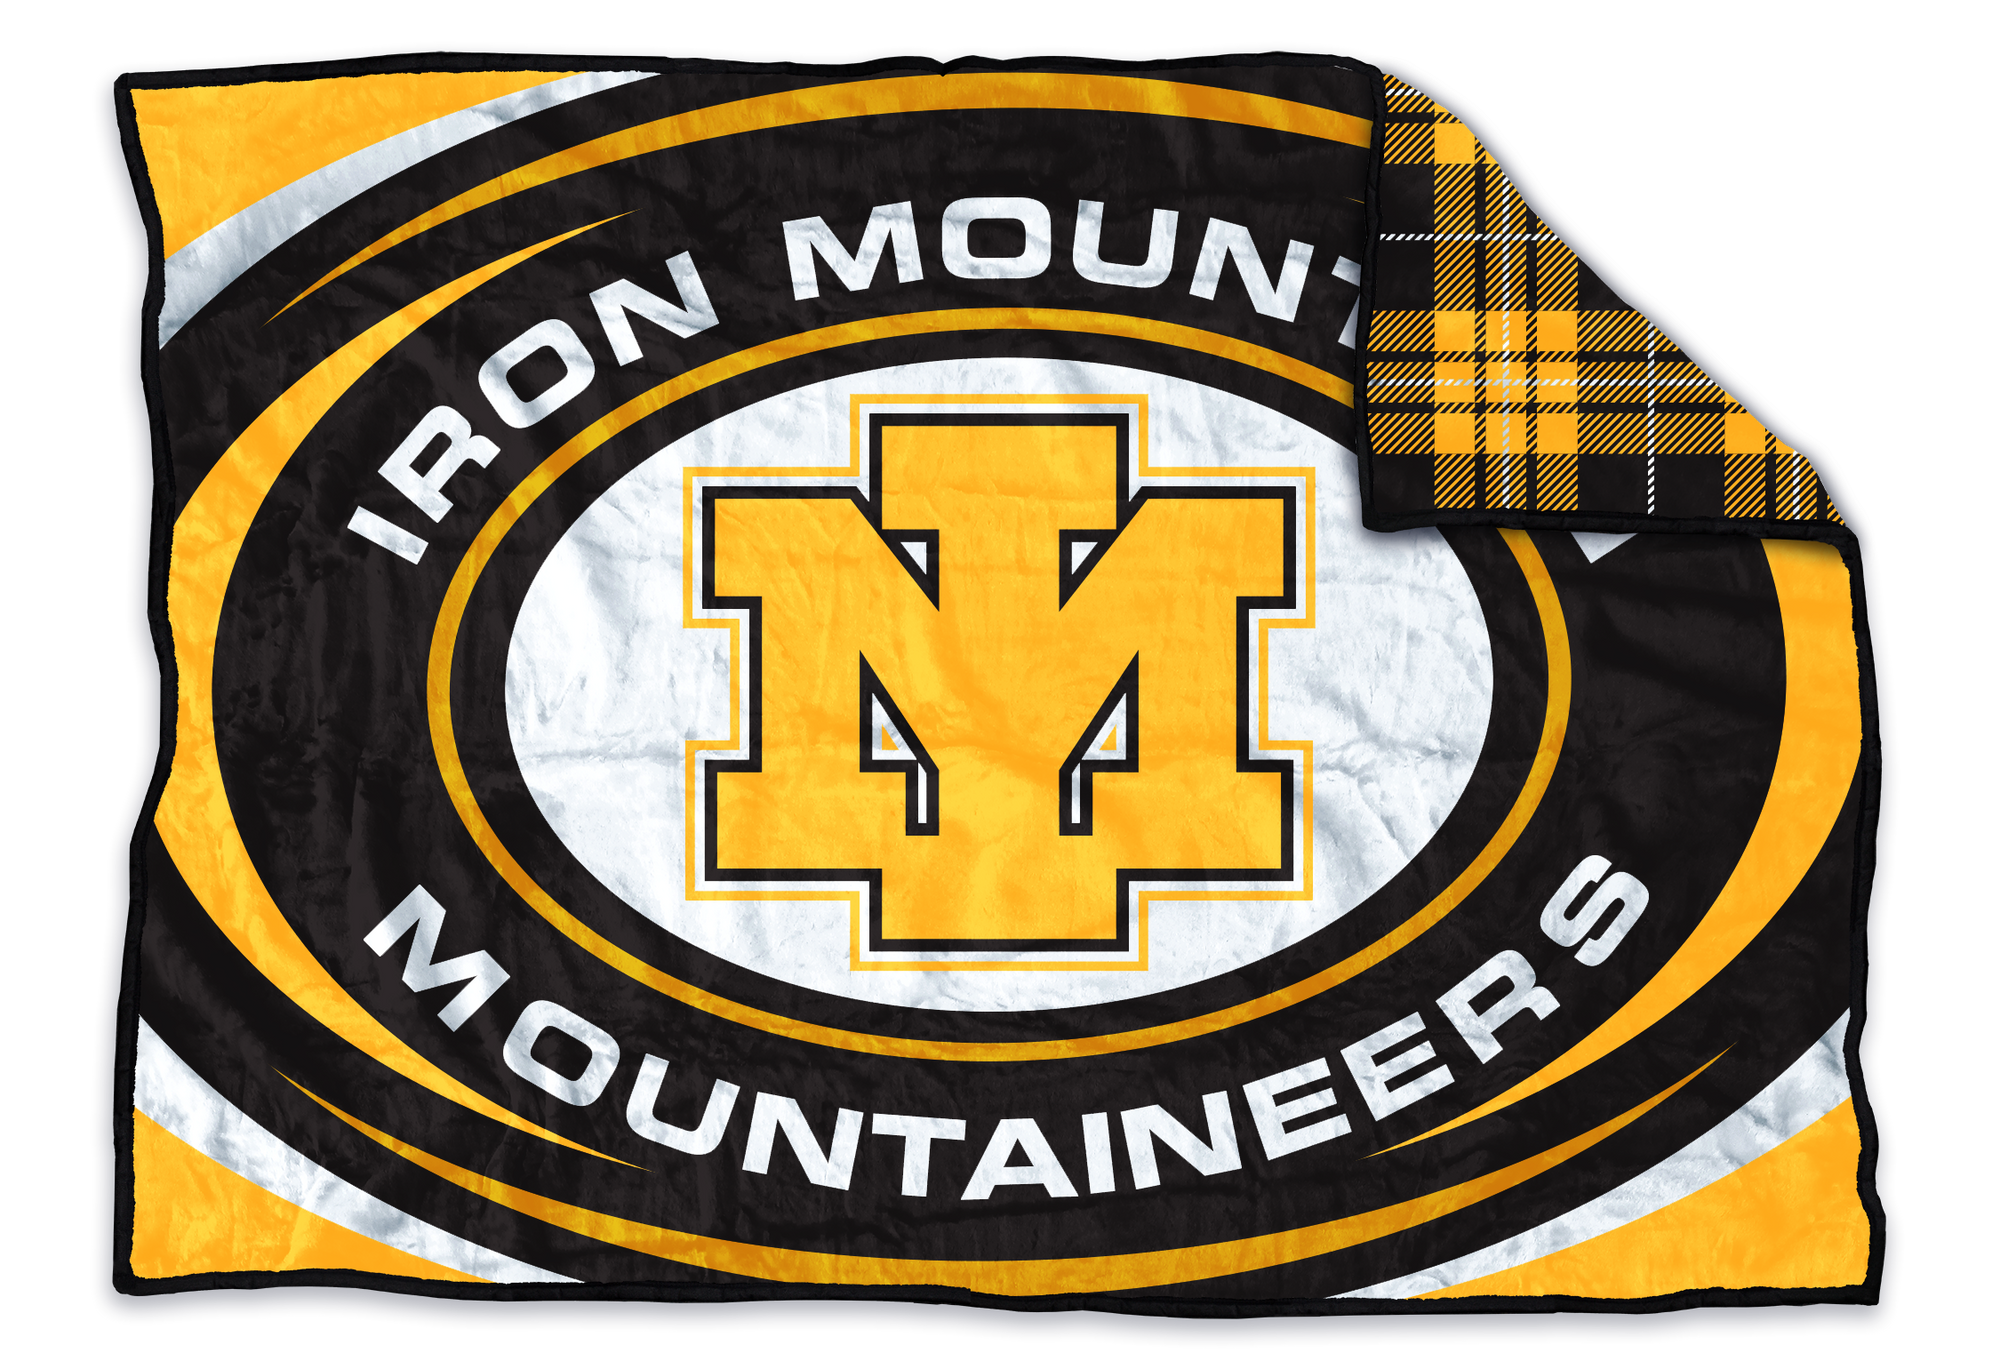 Iron Mountain Mountaineers